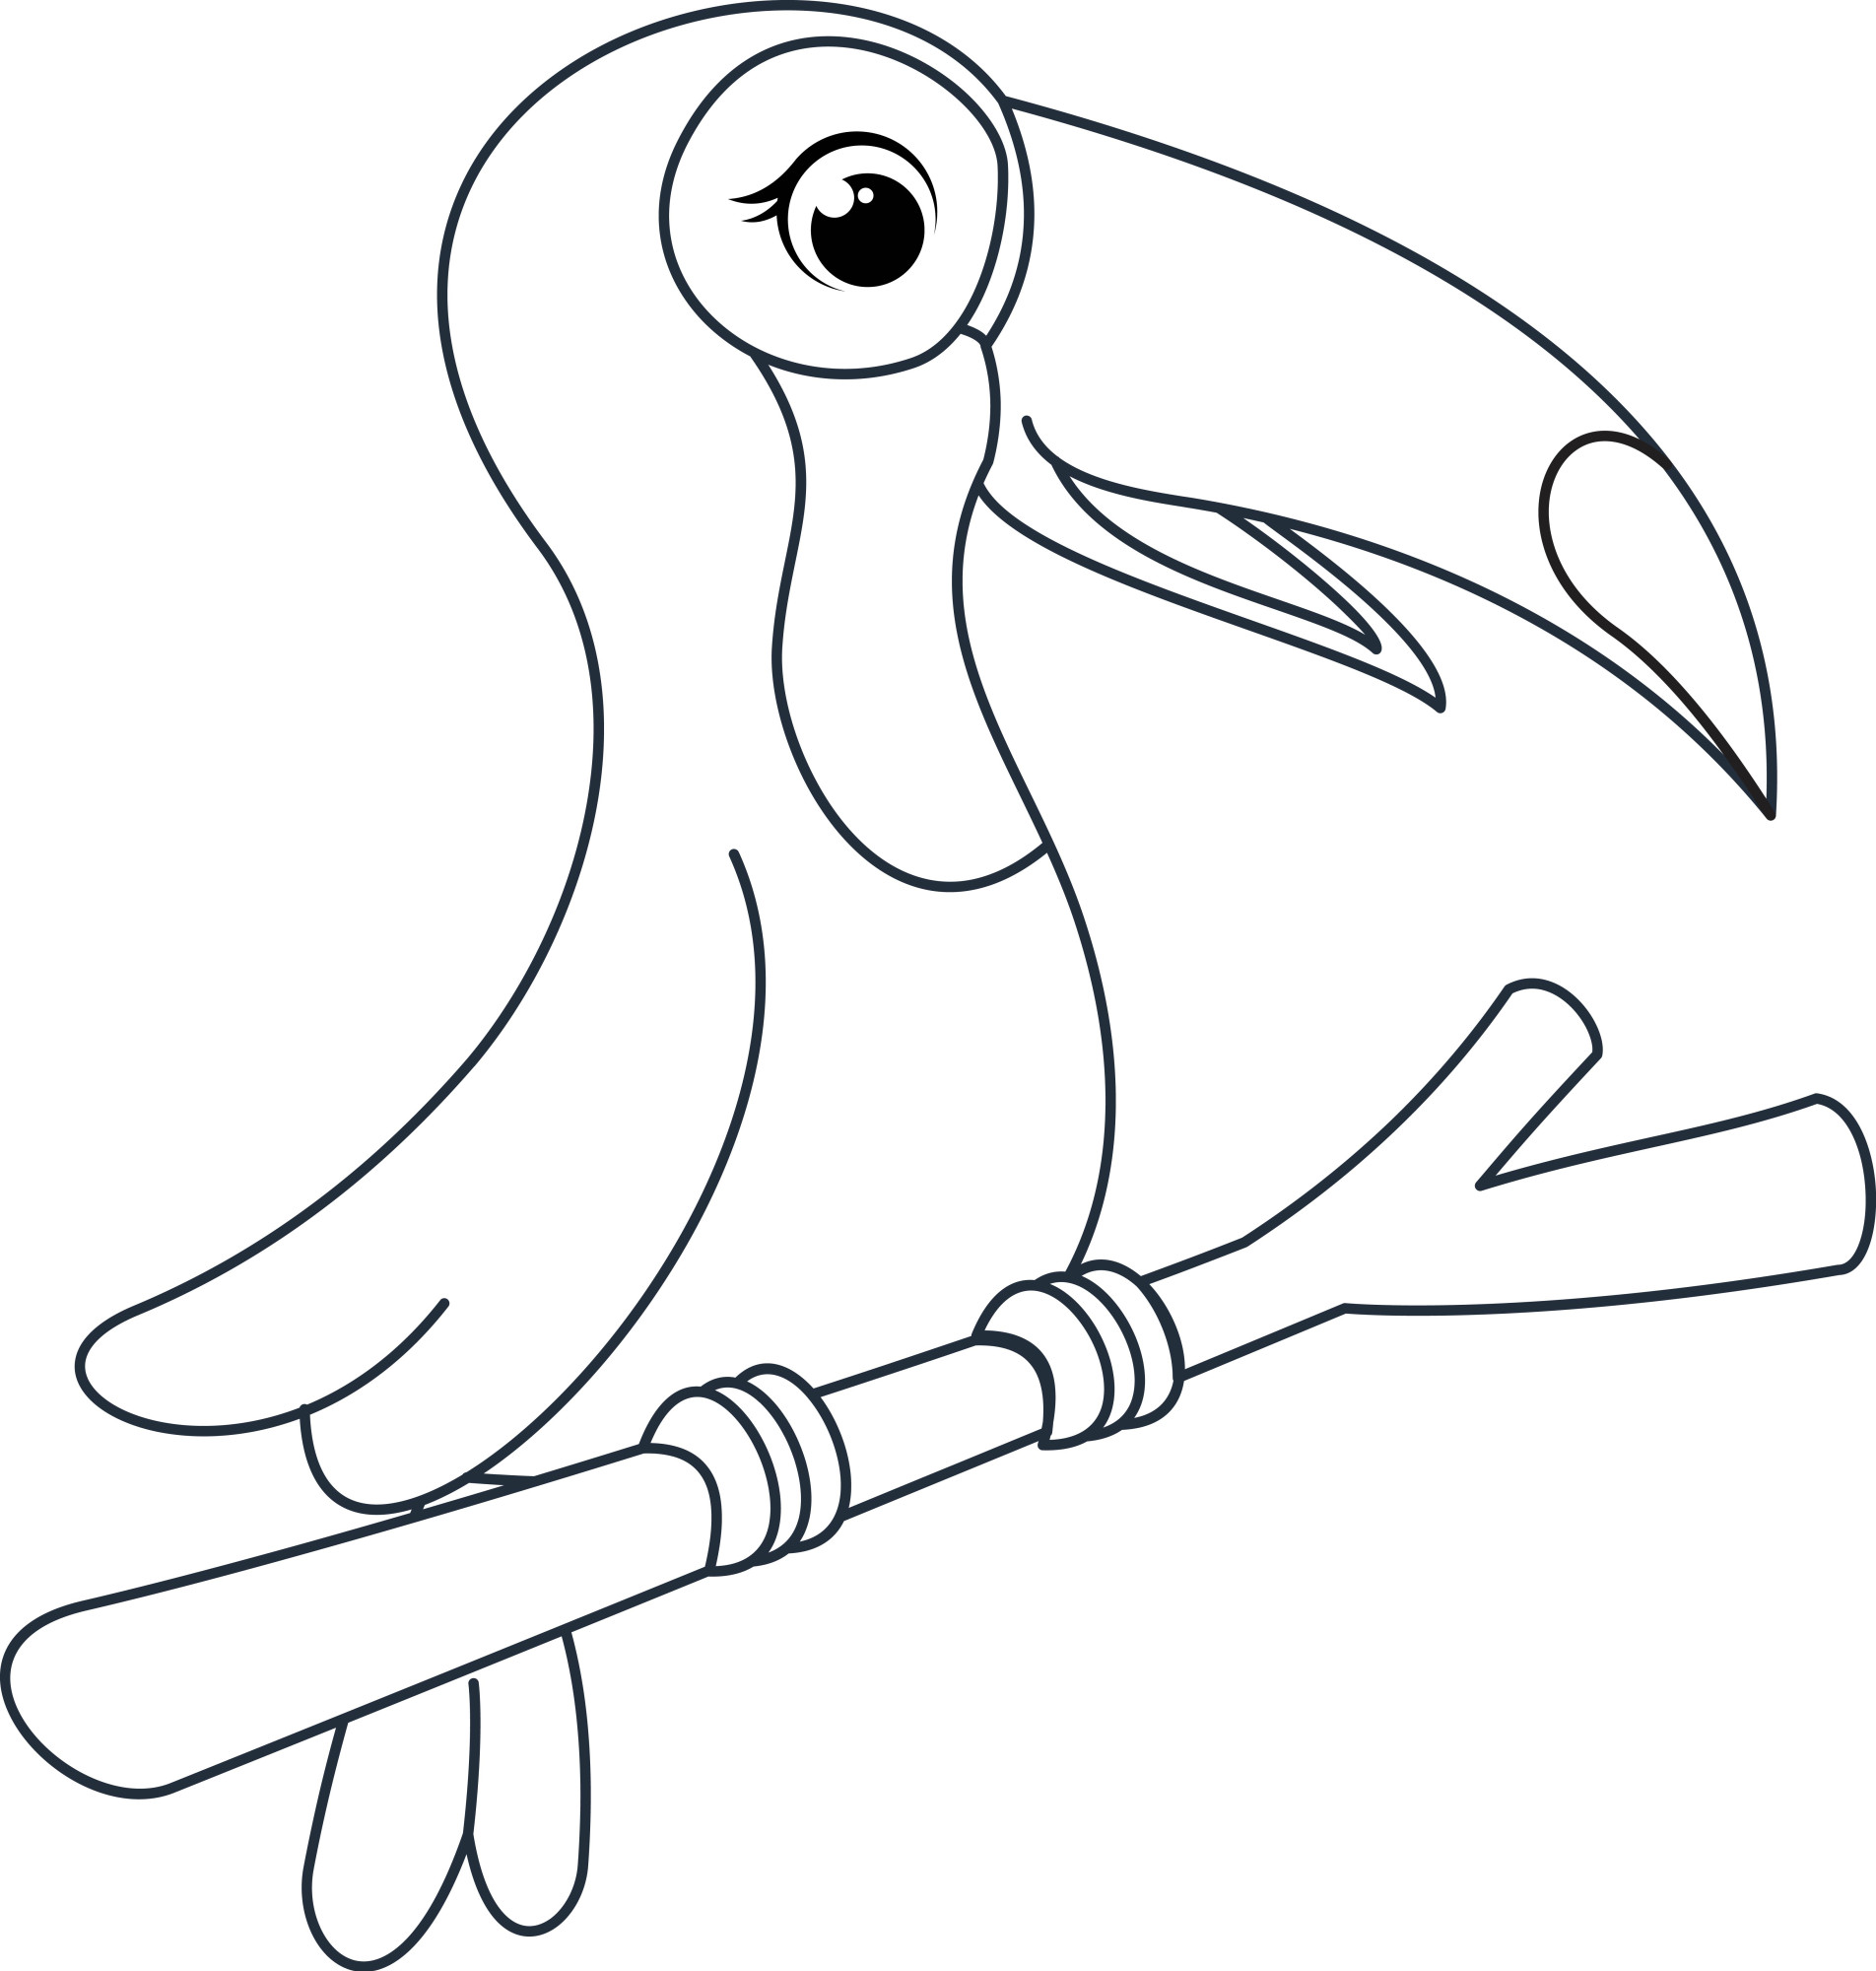 Раскраска для детей: тукан птица